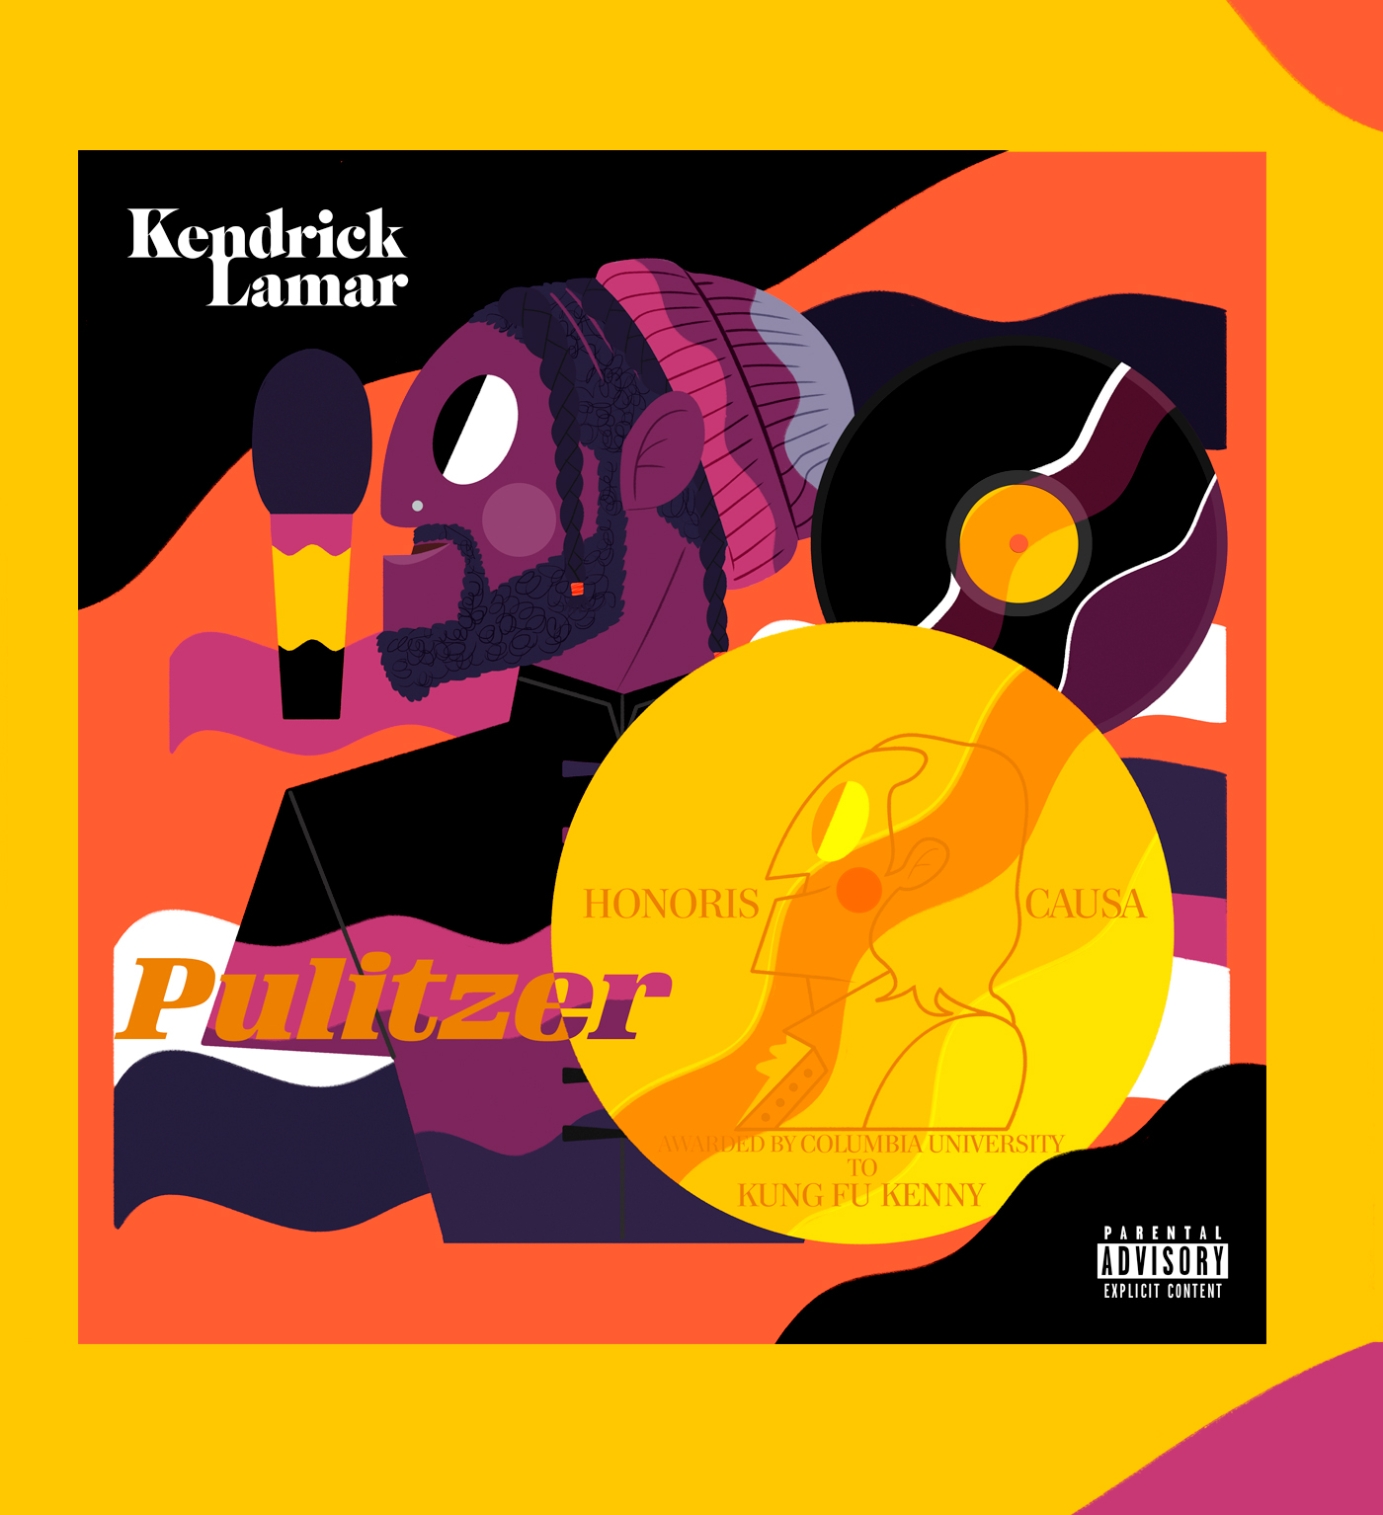 EPKs for Kendrick Lamar by dblackhand